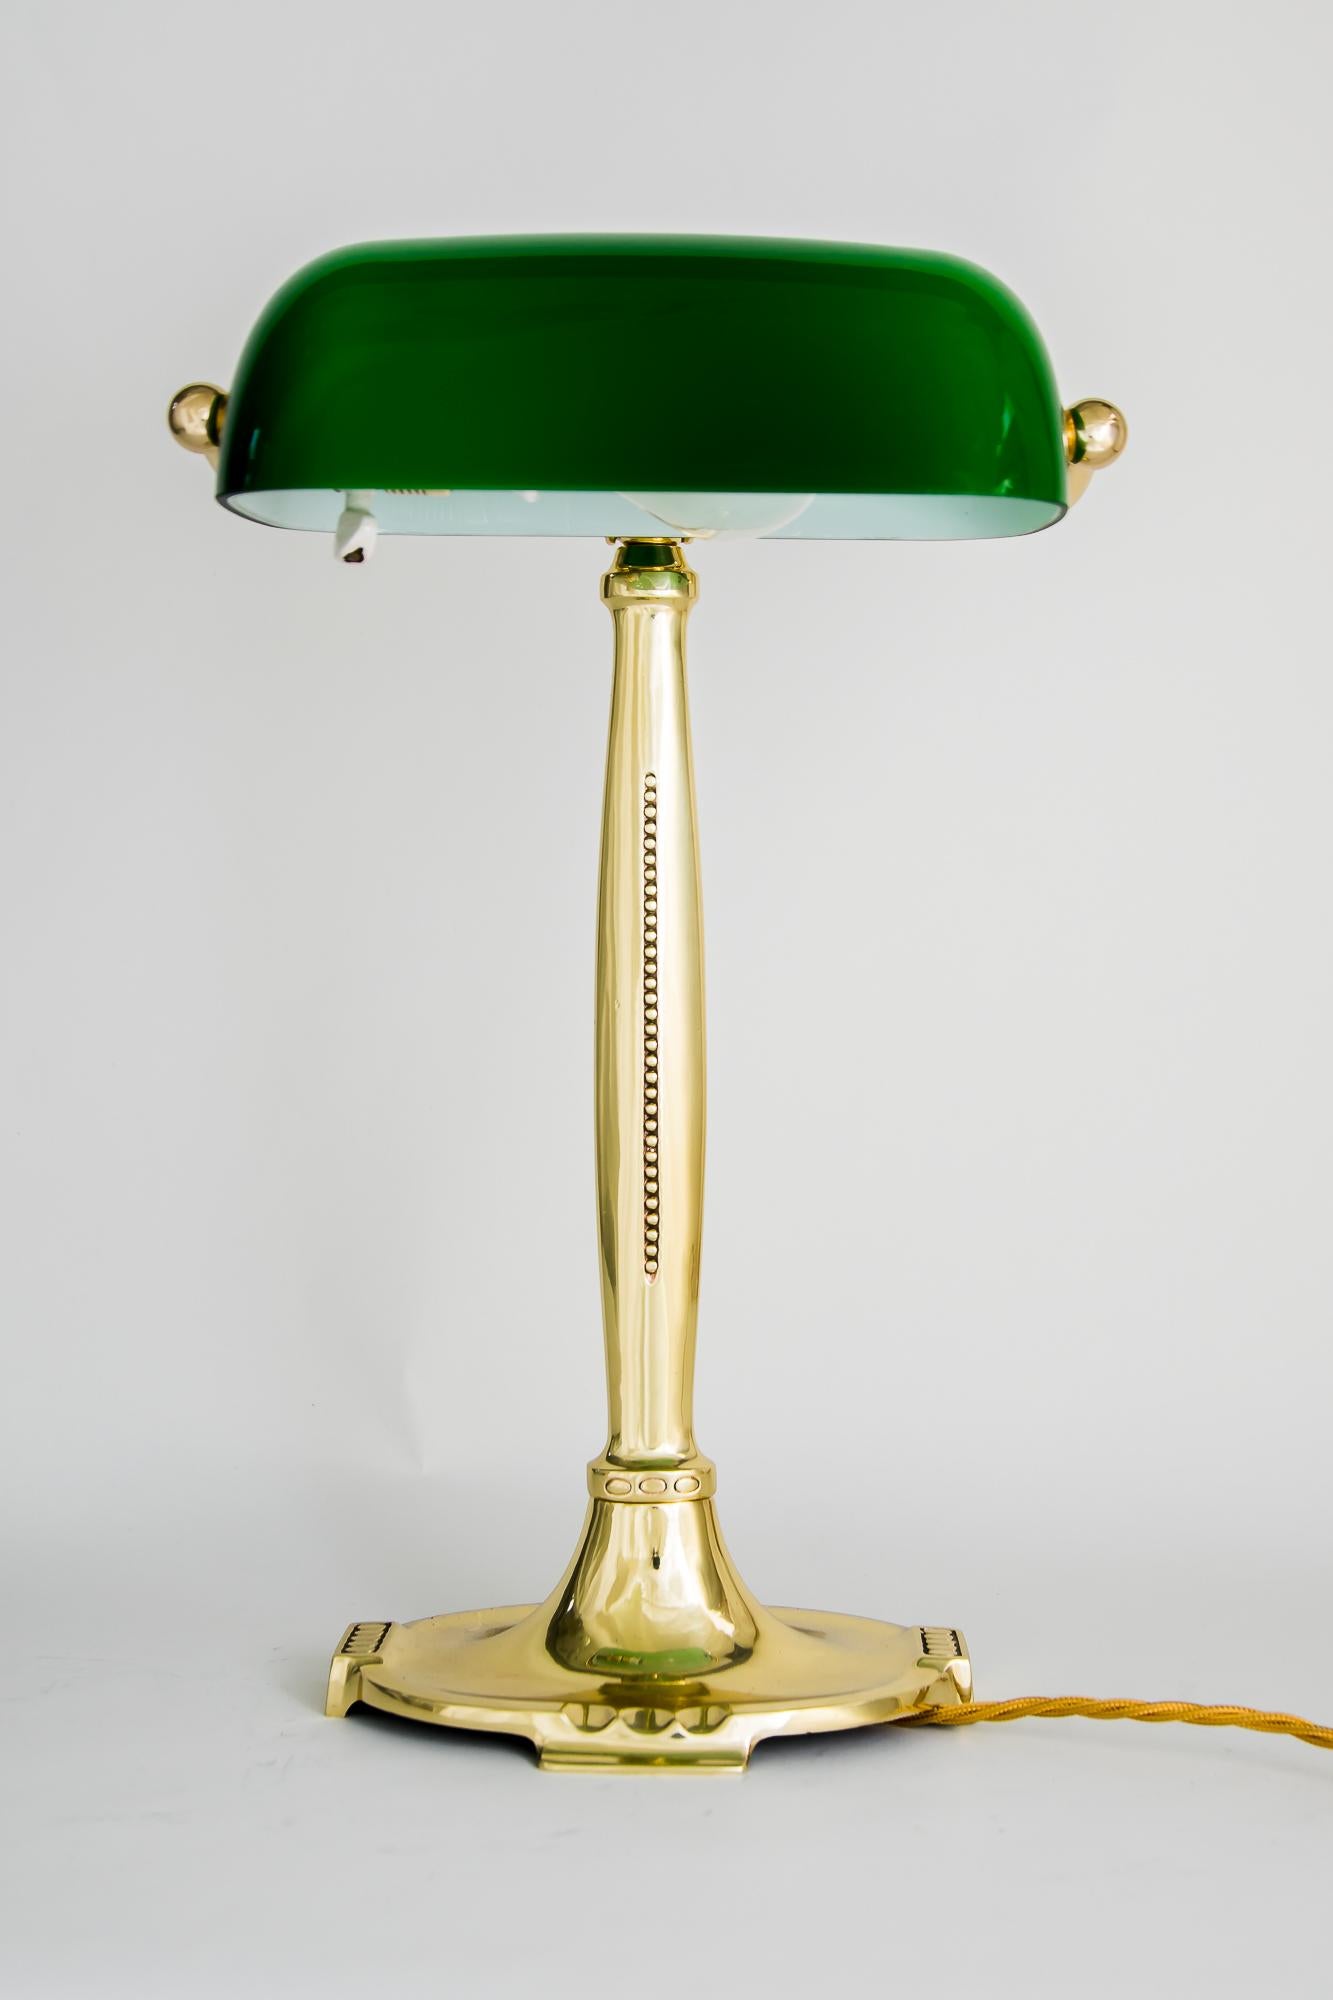 Austrian Art Deco Table Lamp with Original Green Shade, Vienna, Around 1920s